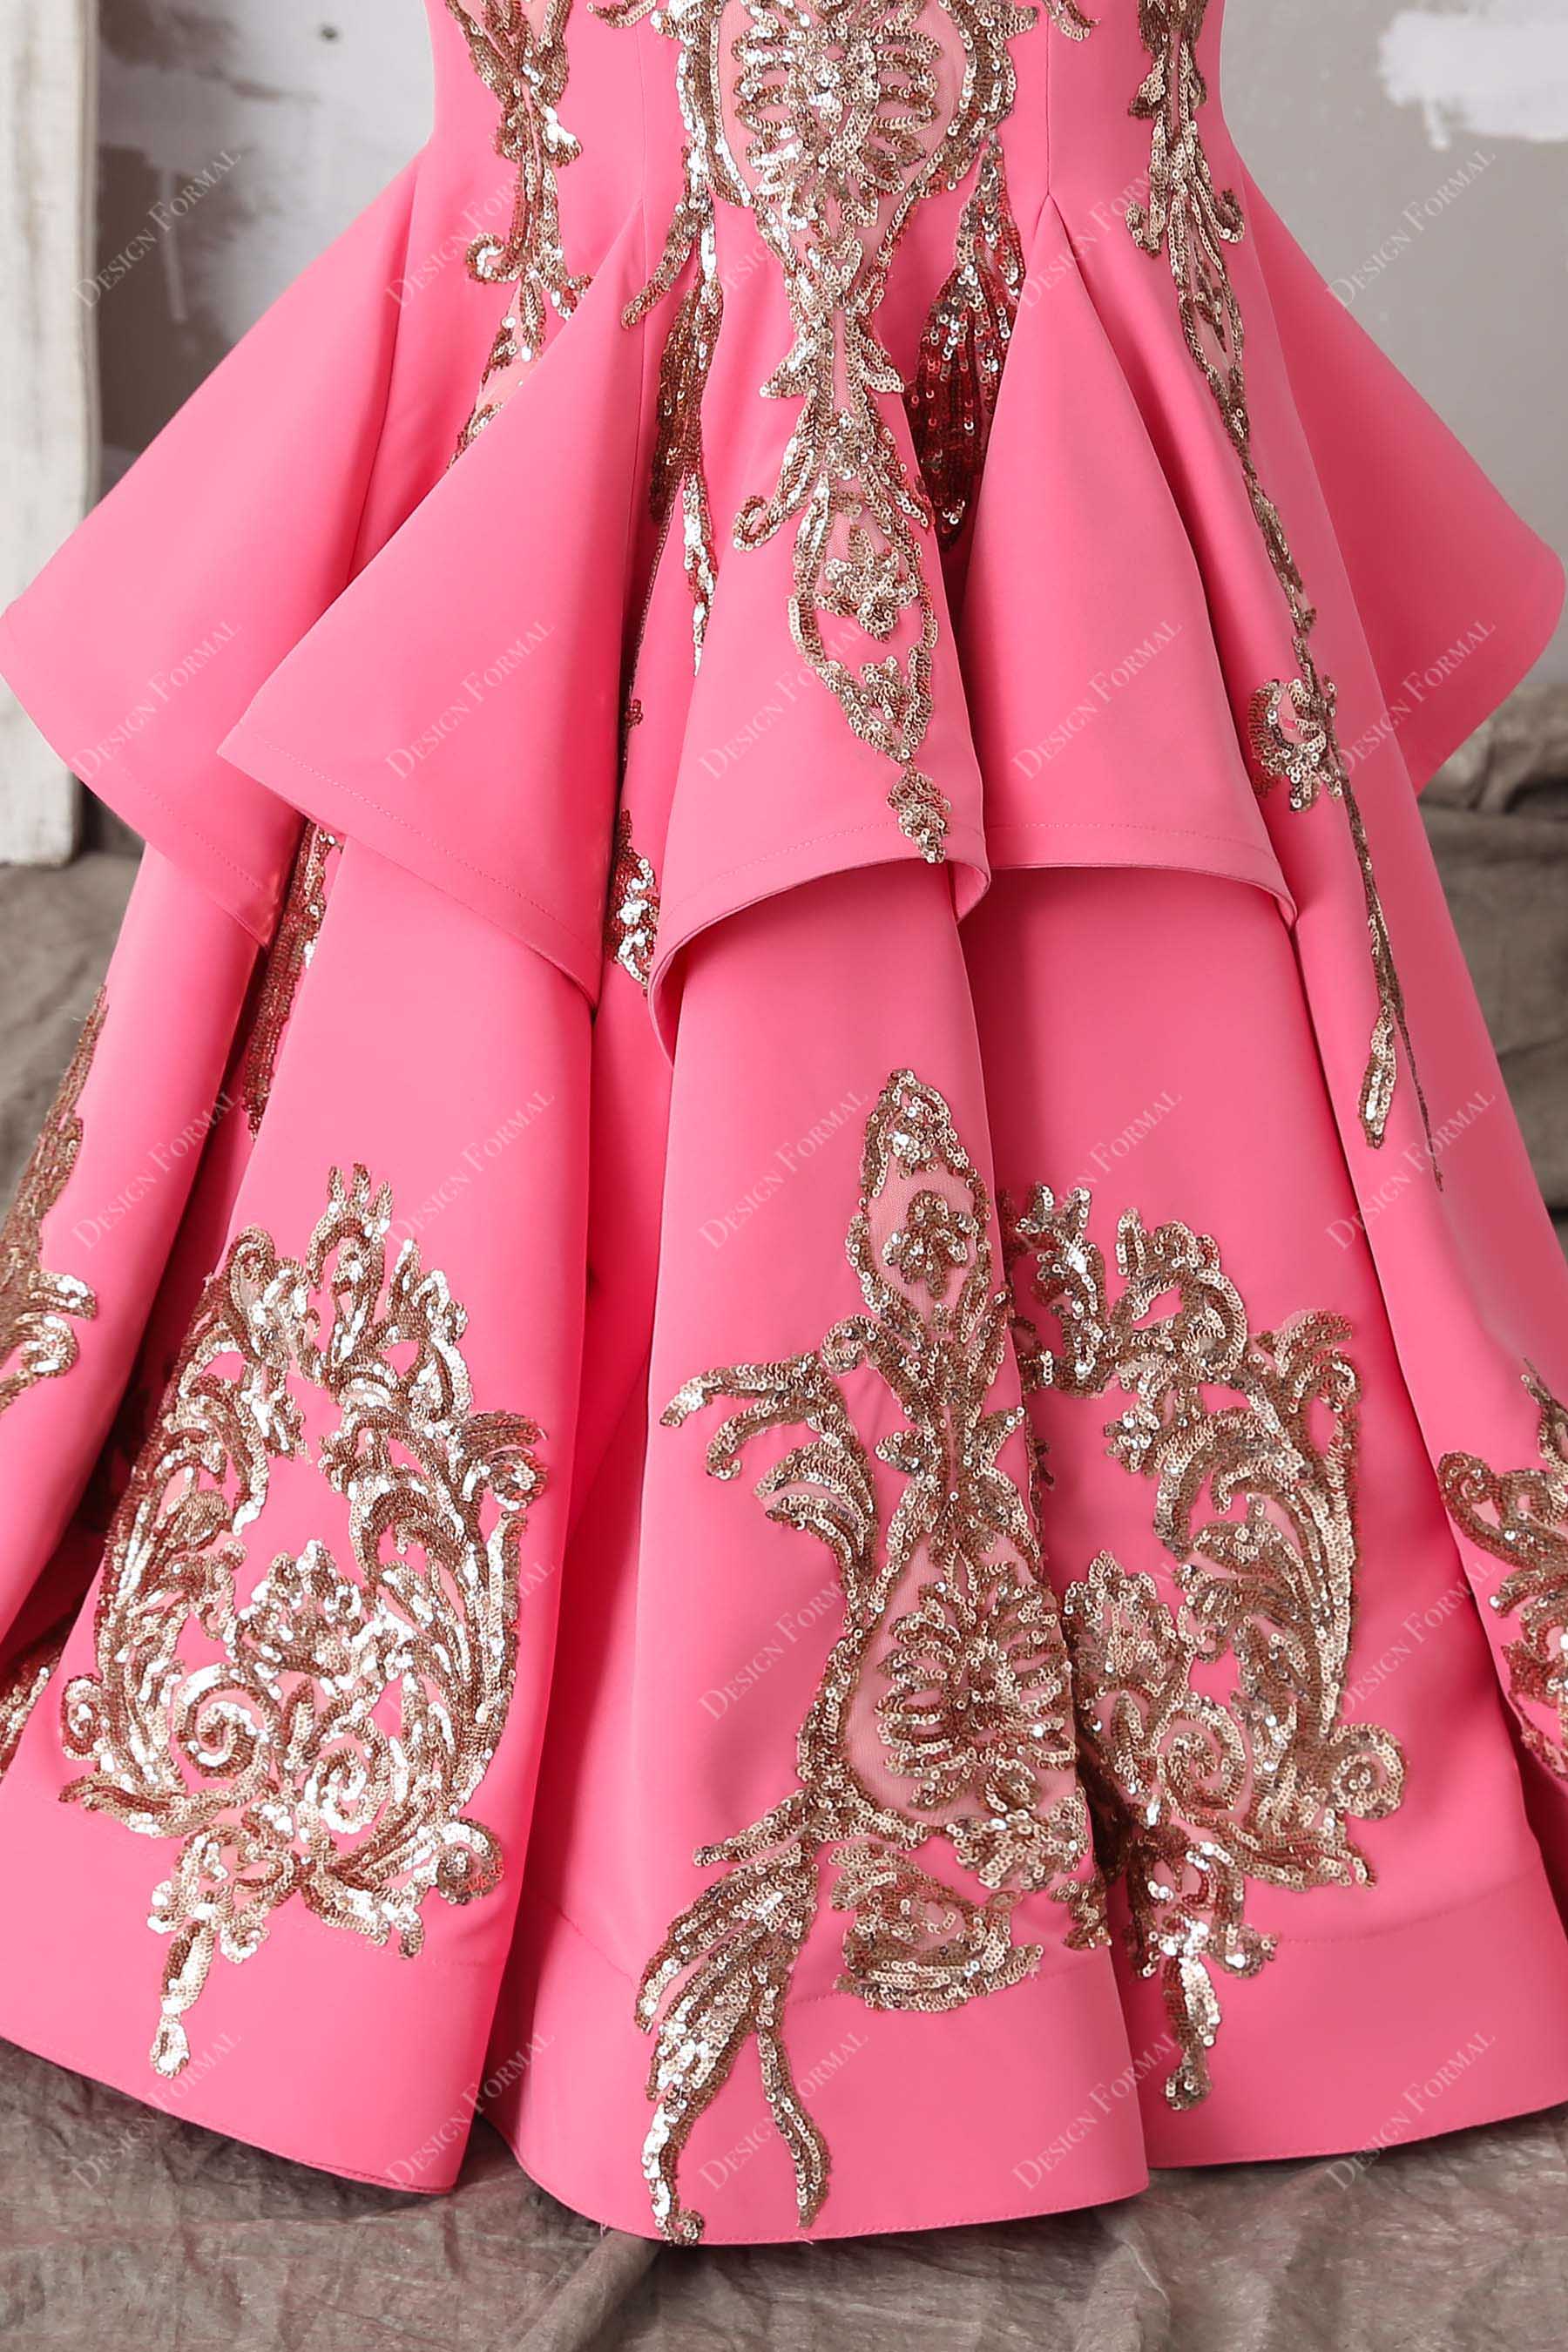 horsehair ruffled trumpet pink prom dress 